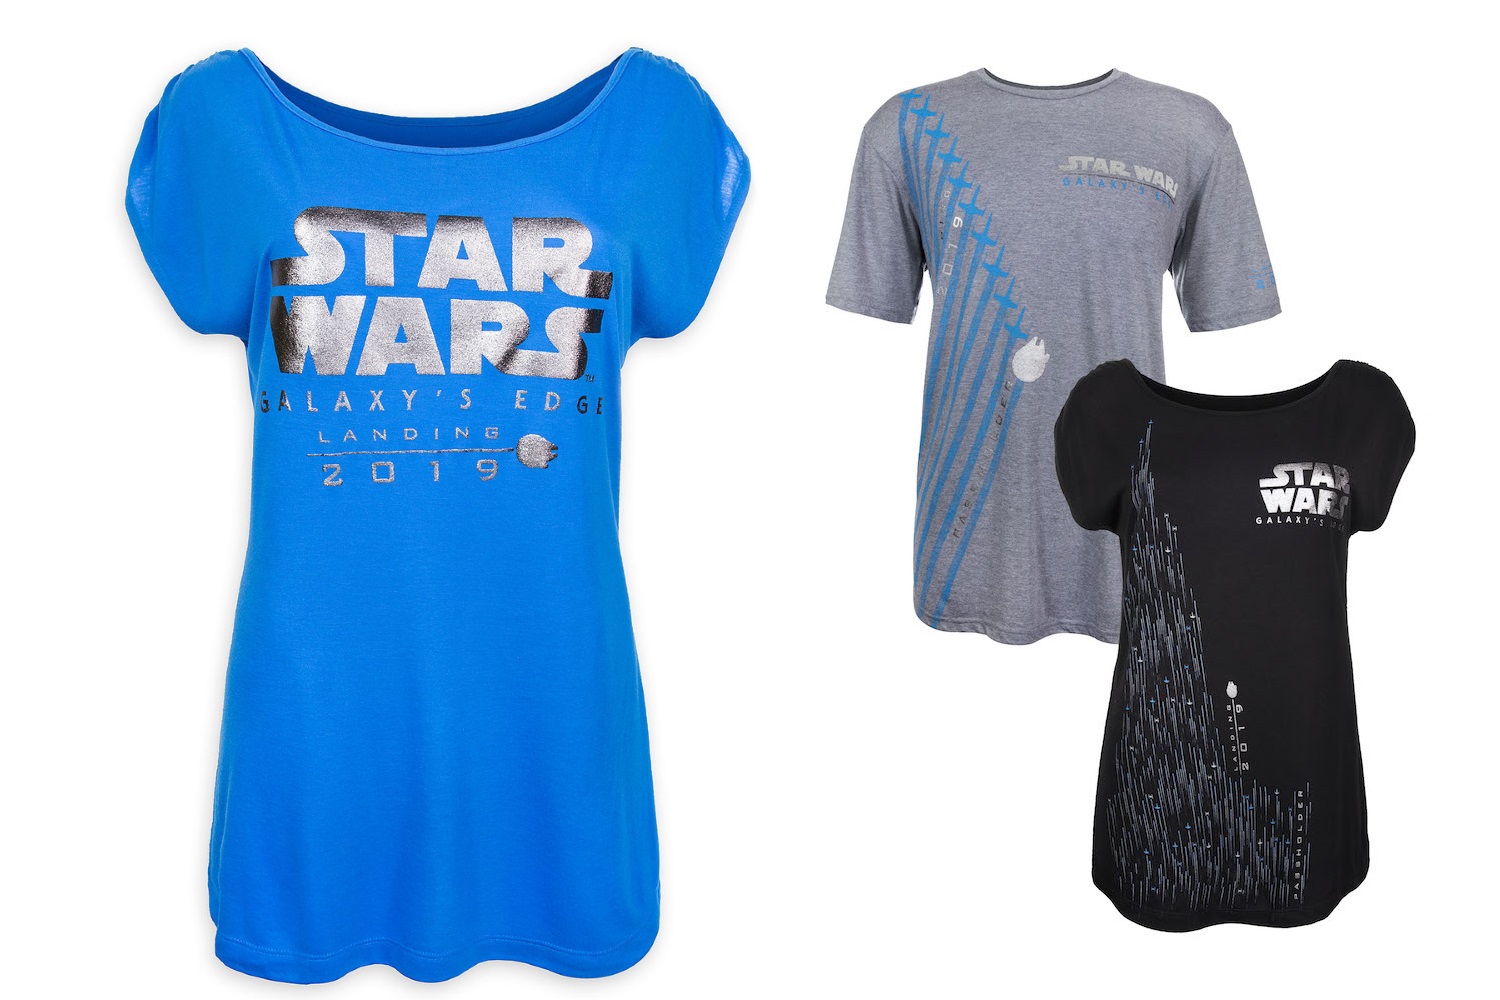 Disney Parks Star Wars Galaxy's Edge apparel at Shop Disney